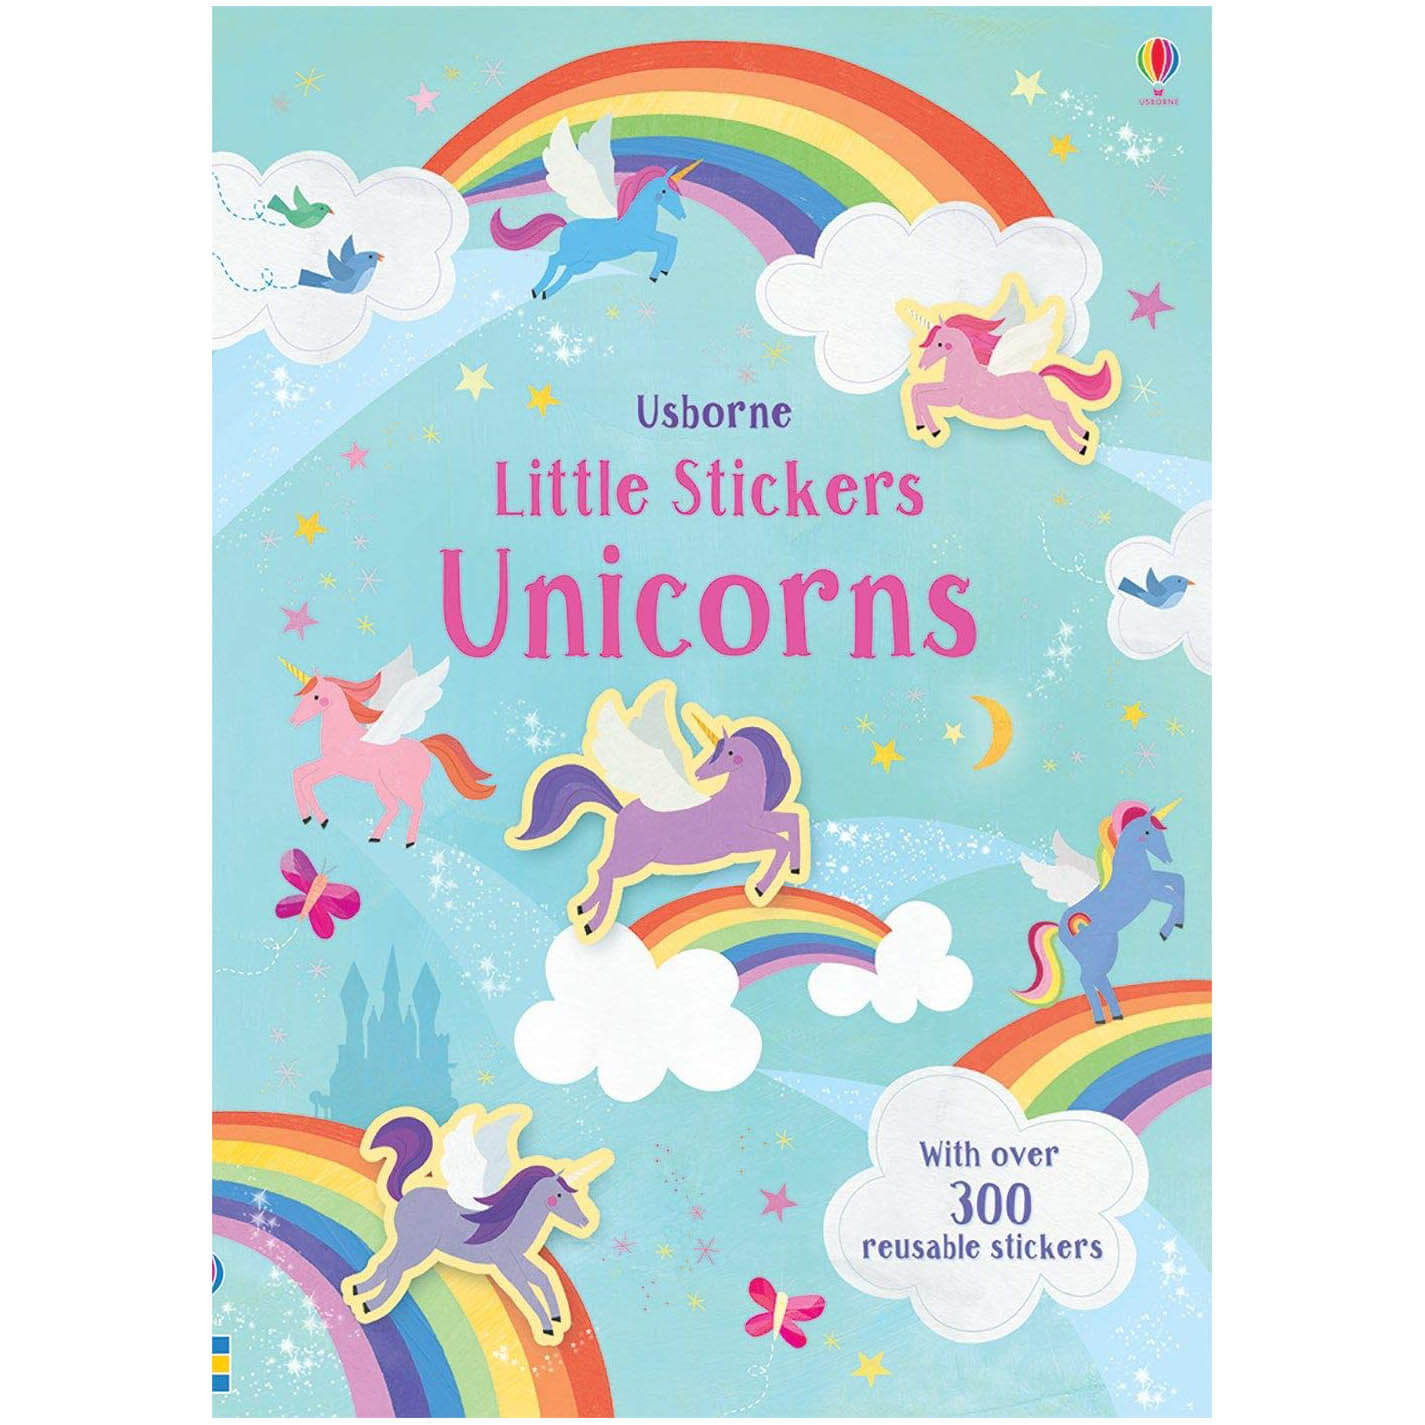 Usborne Little Stickers Unicorns (Little Stickers Books)